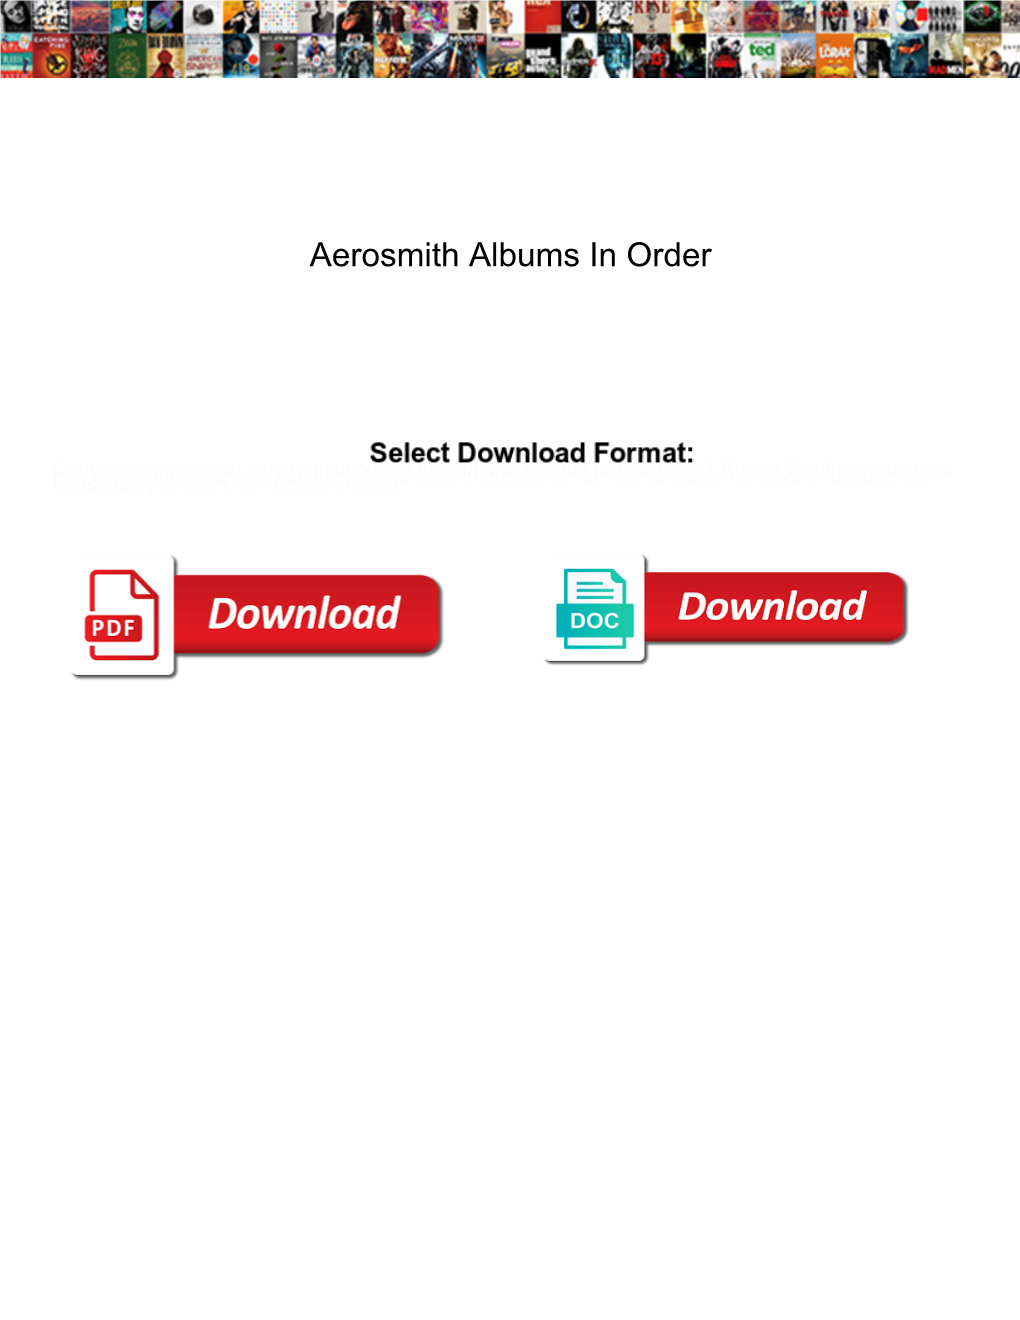 Aerosmith Albums in Order